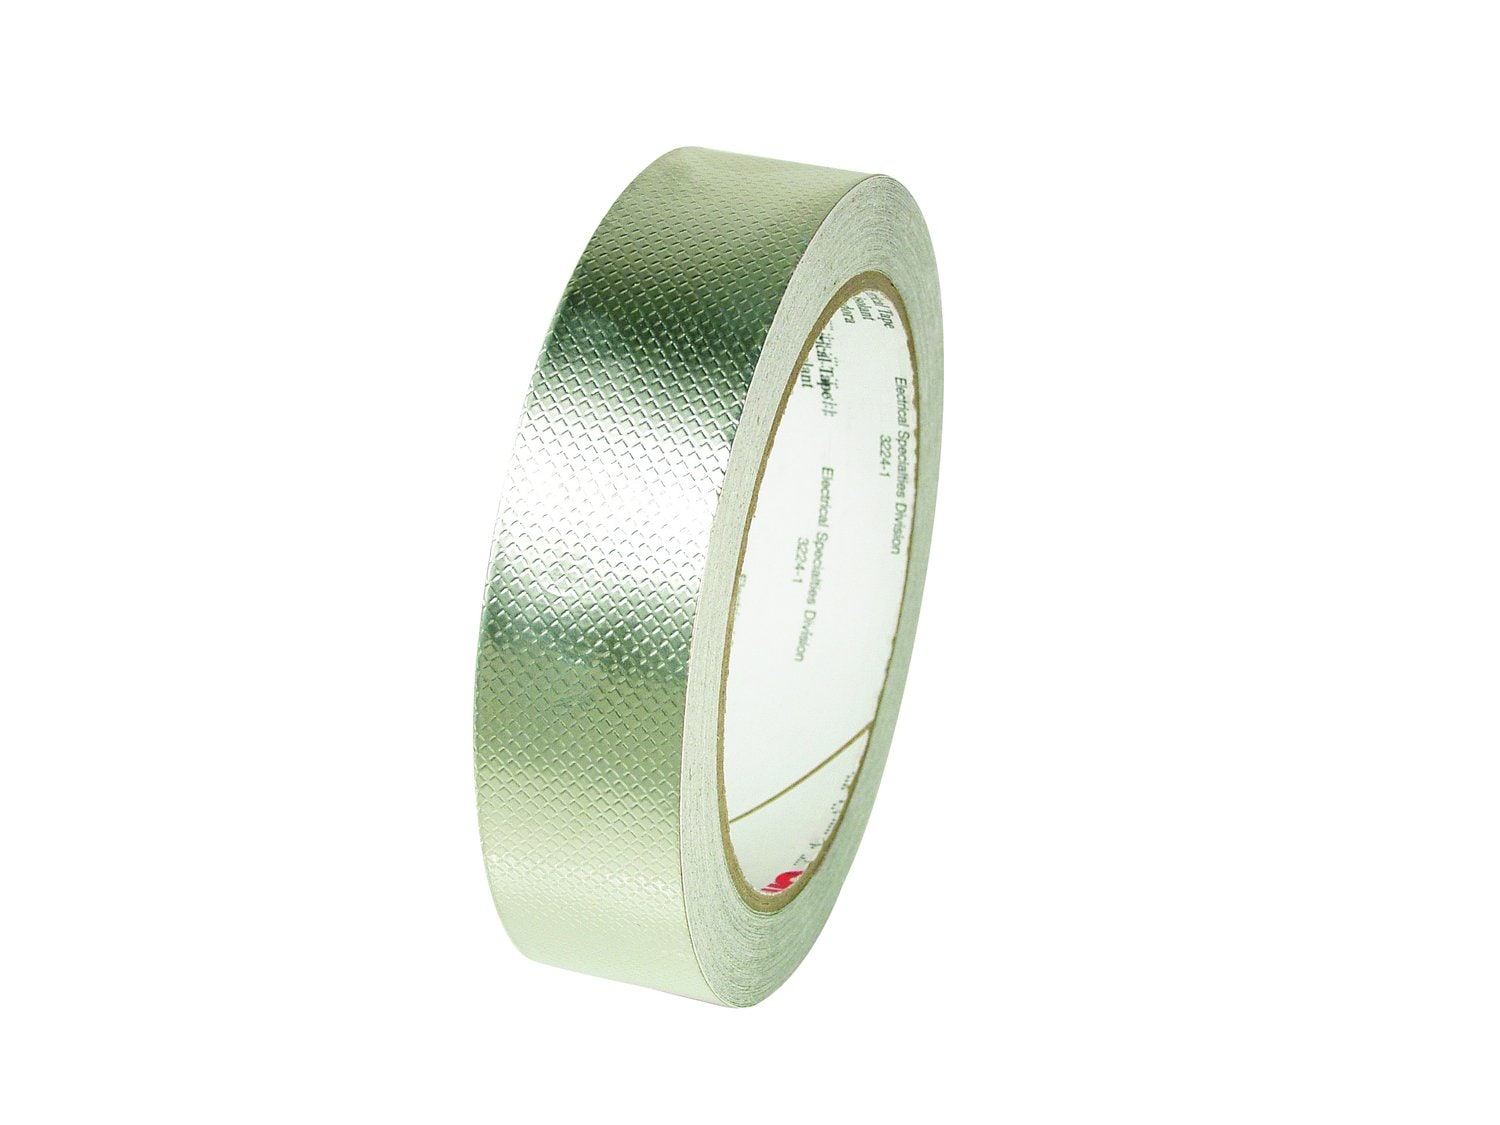 7100136952 - 3M Embossed Tin-Plated Copper Foil EMI Shielding Tape 1345, 1 in x 18
yd, 3 in Paper Core, 9 Rolls/Case